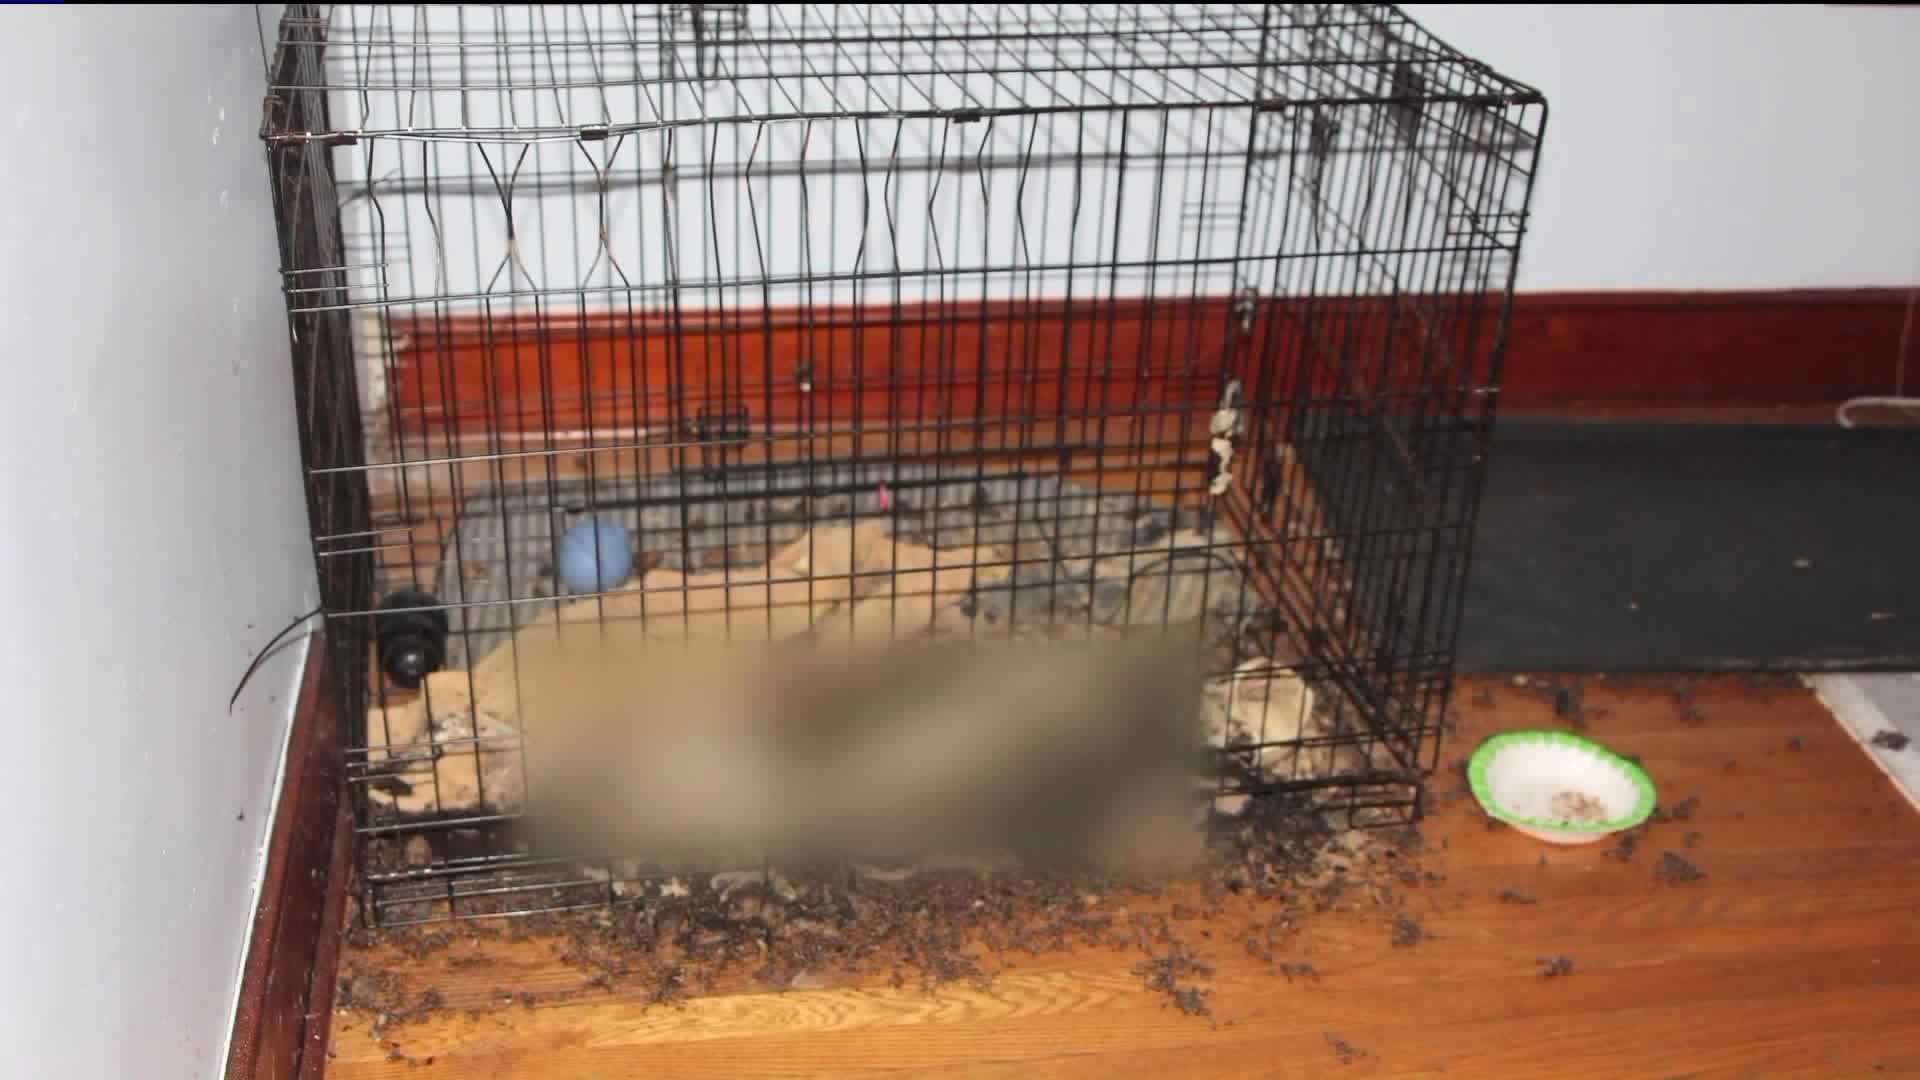 Fairfield Animal Cruelty Investigation